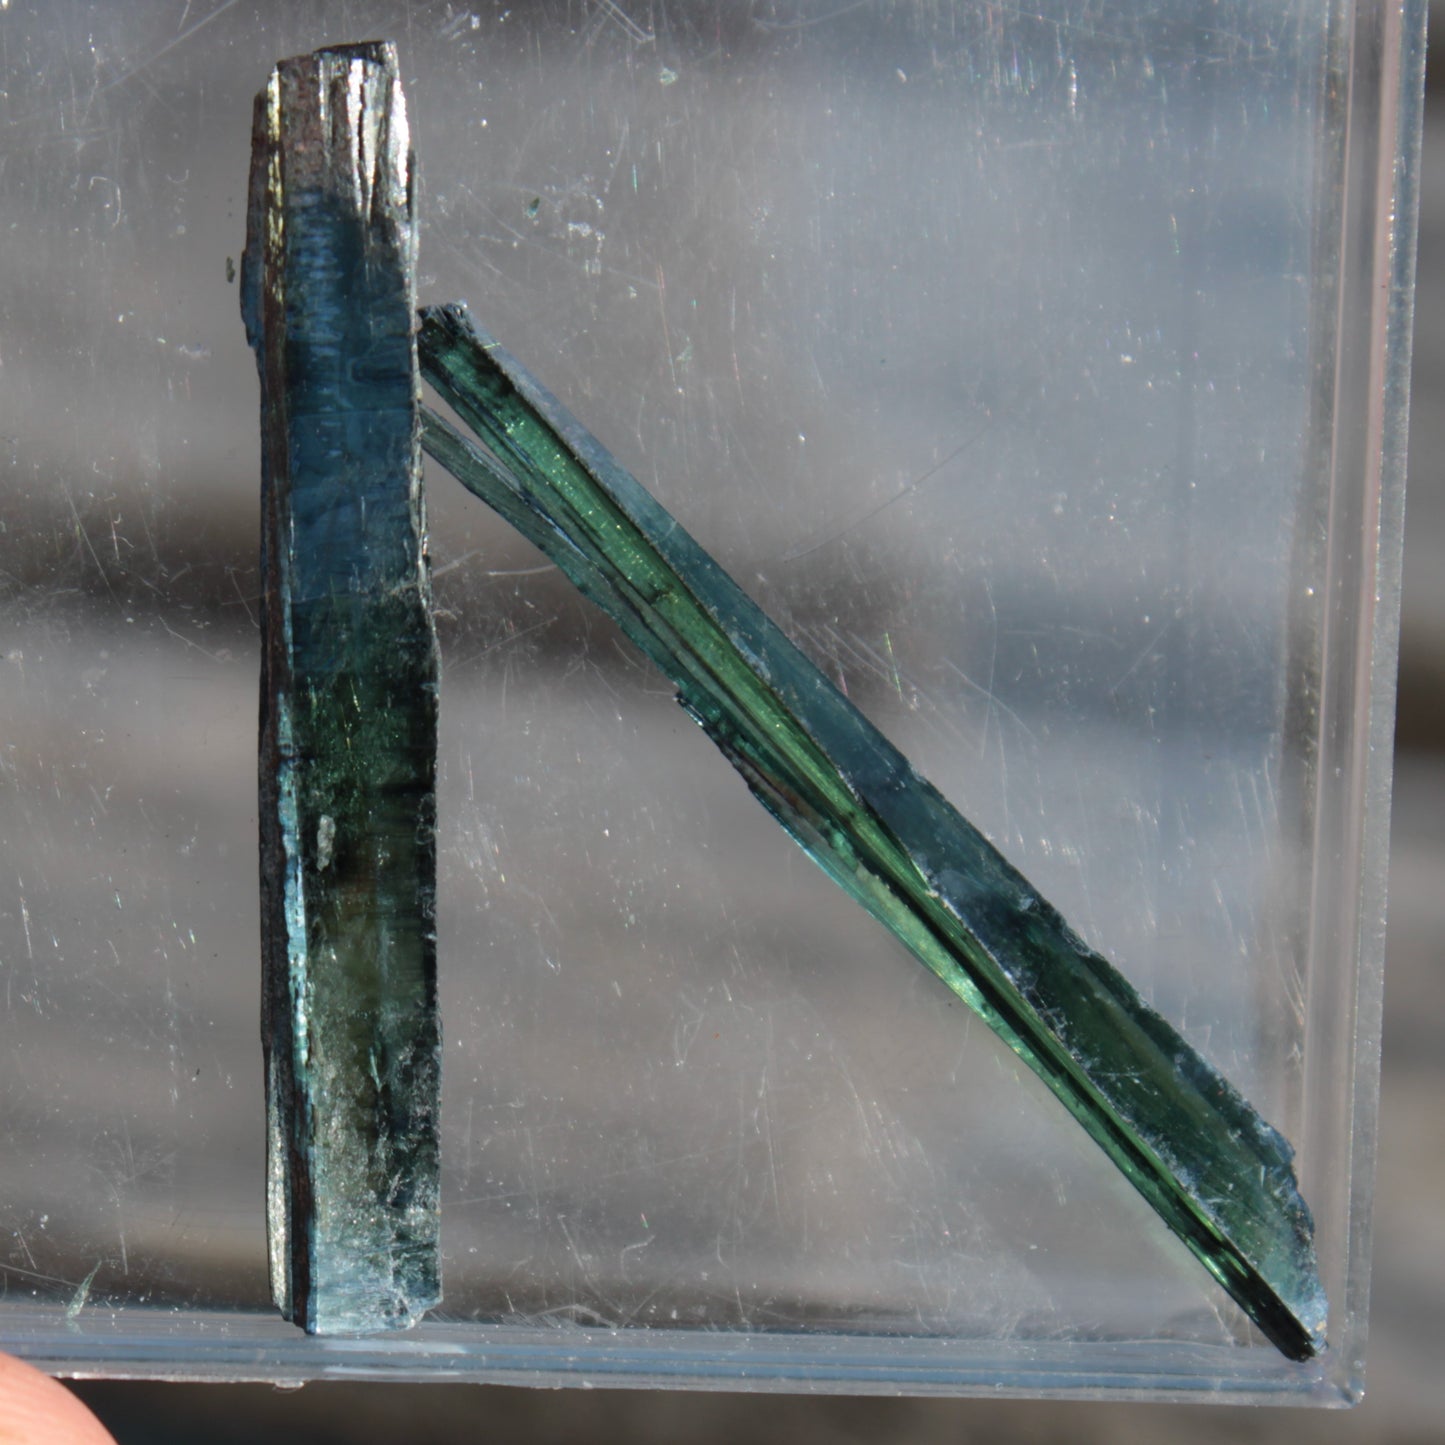 Vivianite Ludlamite 2 crystals 40/42mm from Brazil 2.1g